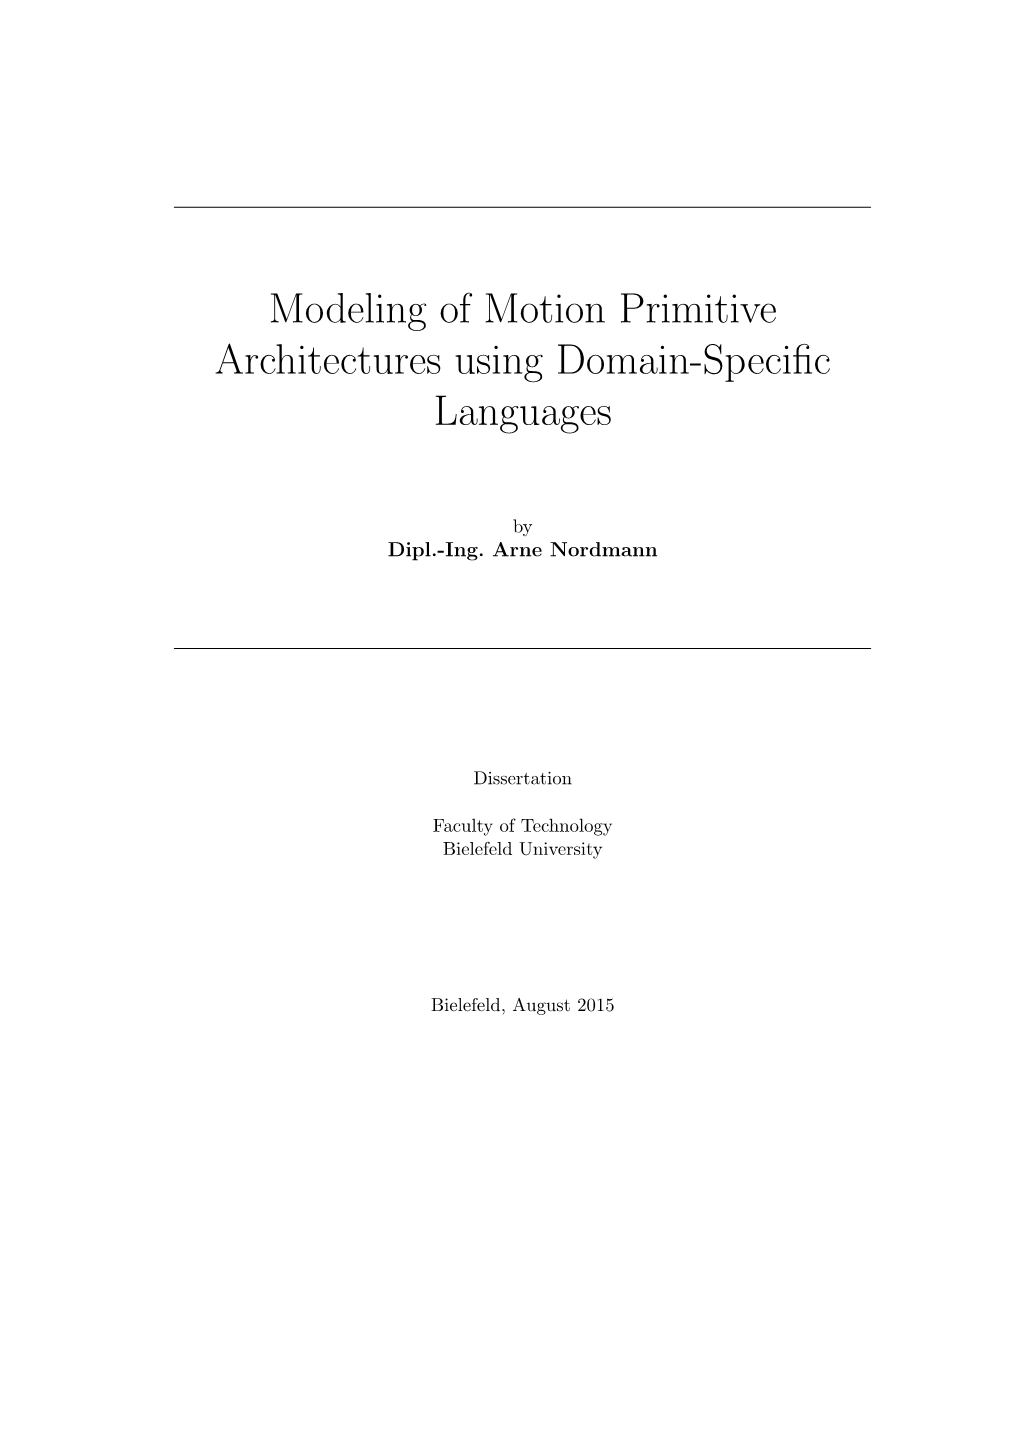 Modeling of Motion Primitive Architectures Using Domain-Speciﬁc Languages